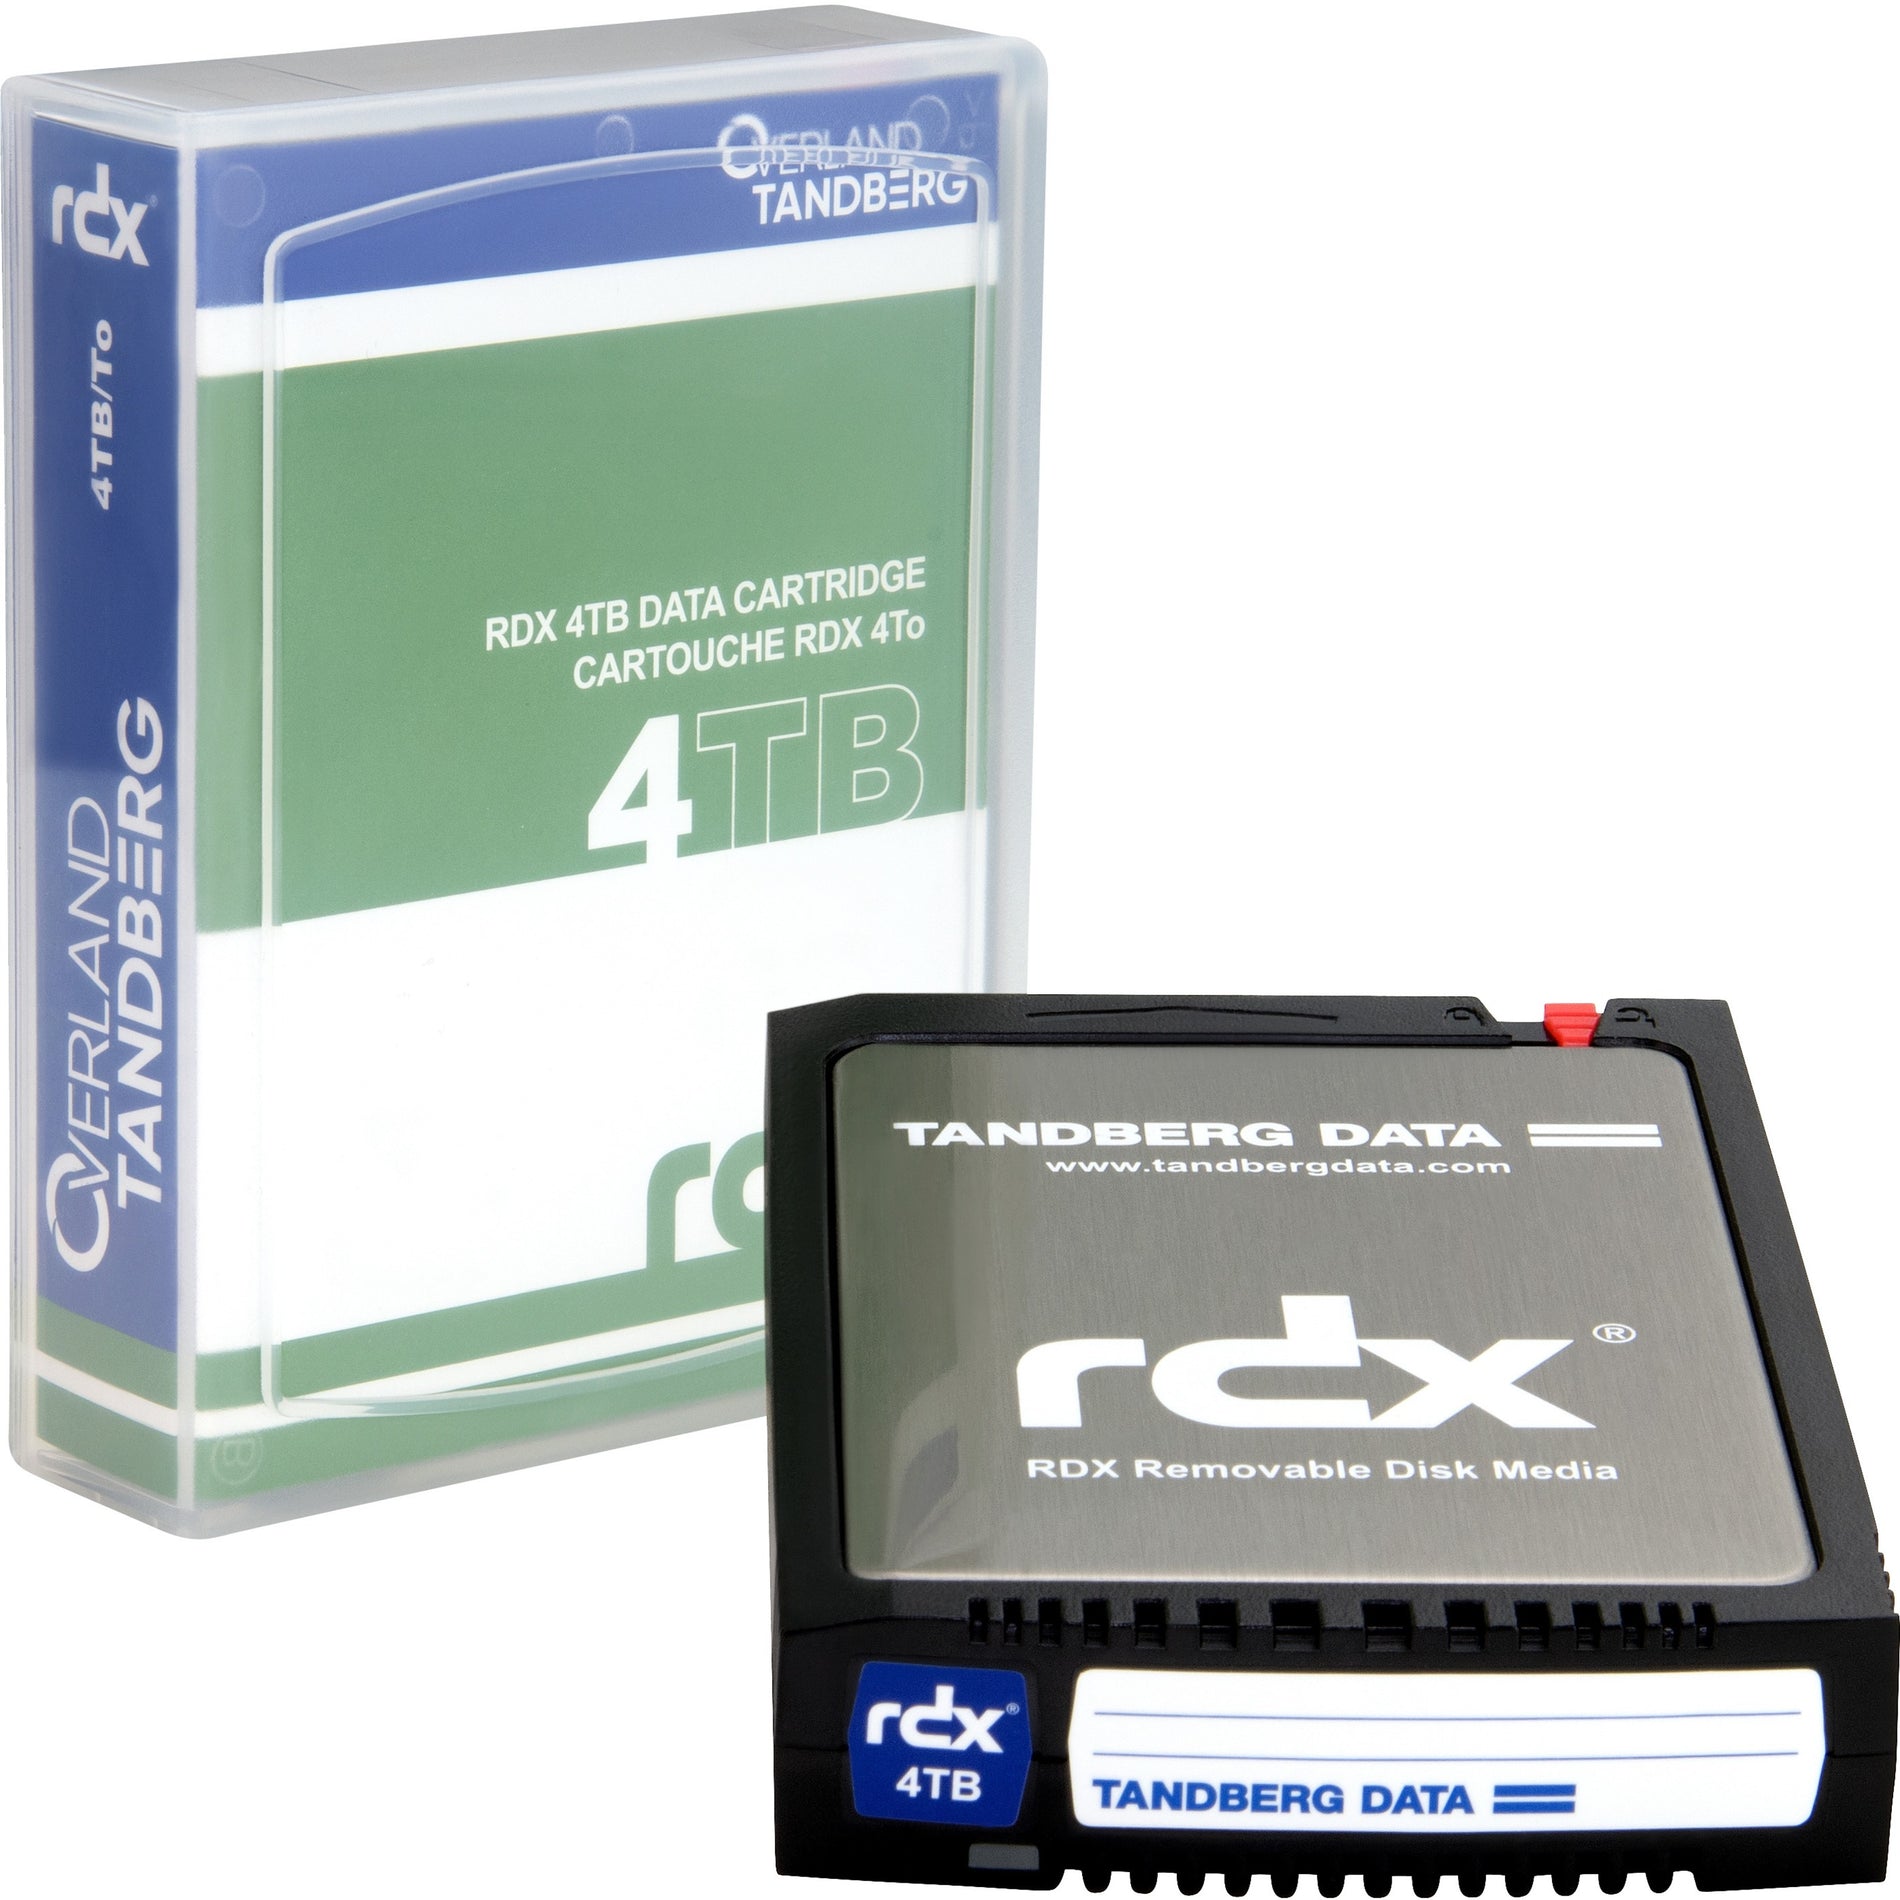 Overland-Tandberg 8824-RDX RDX QuikStor Hard Drive Cartridge, 4TB Storage Capacity